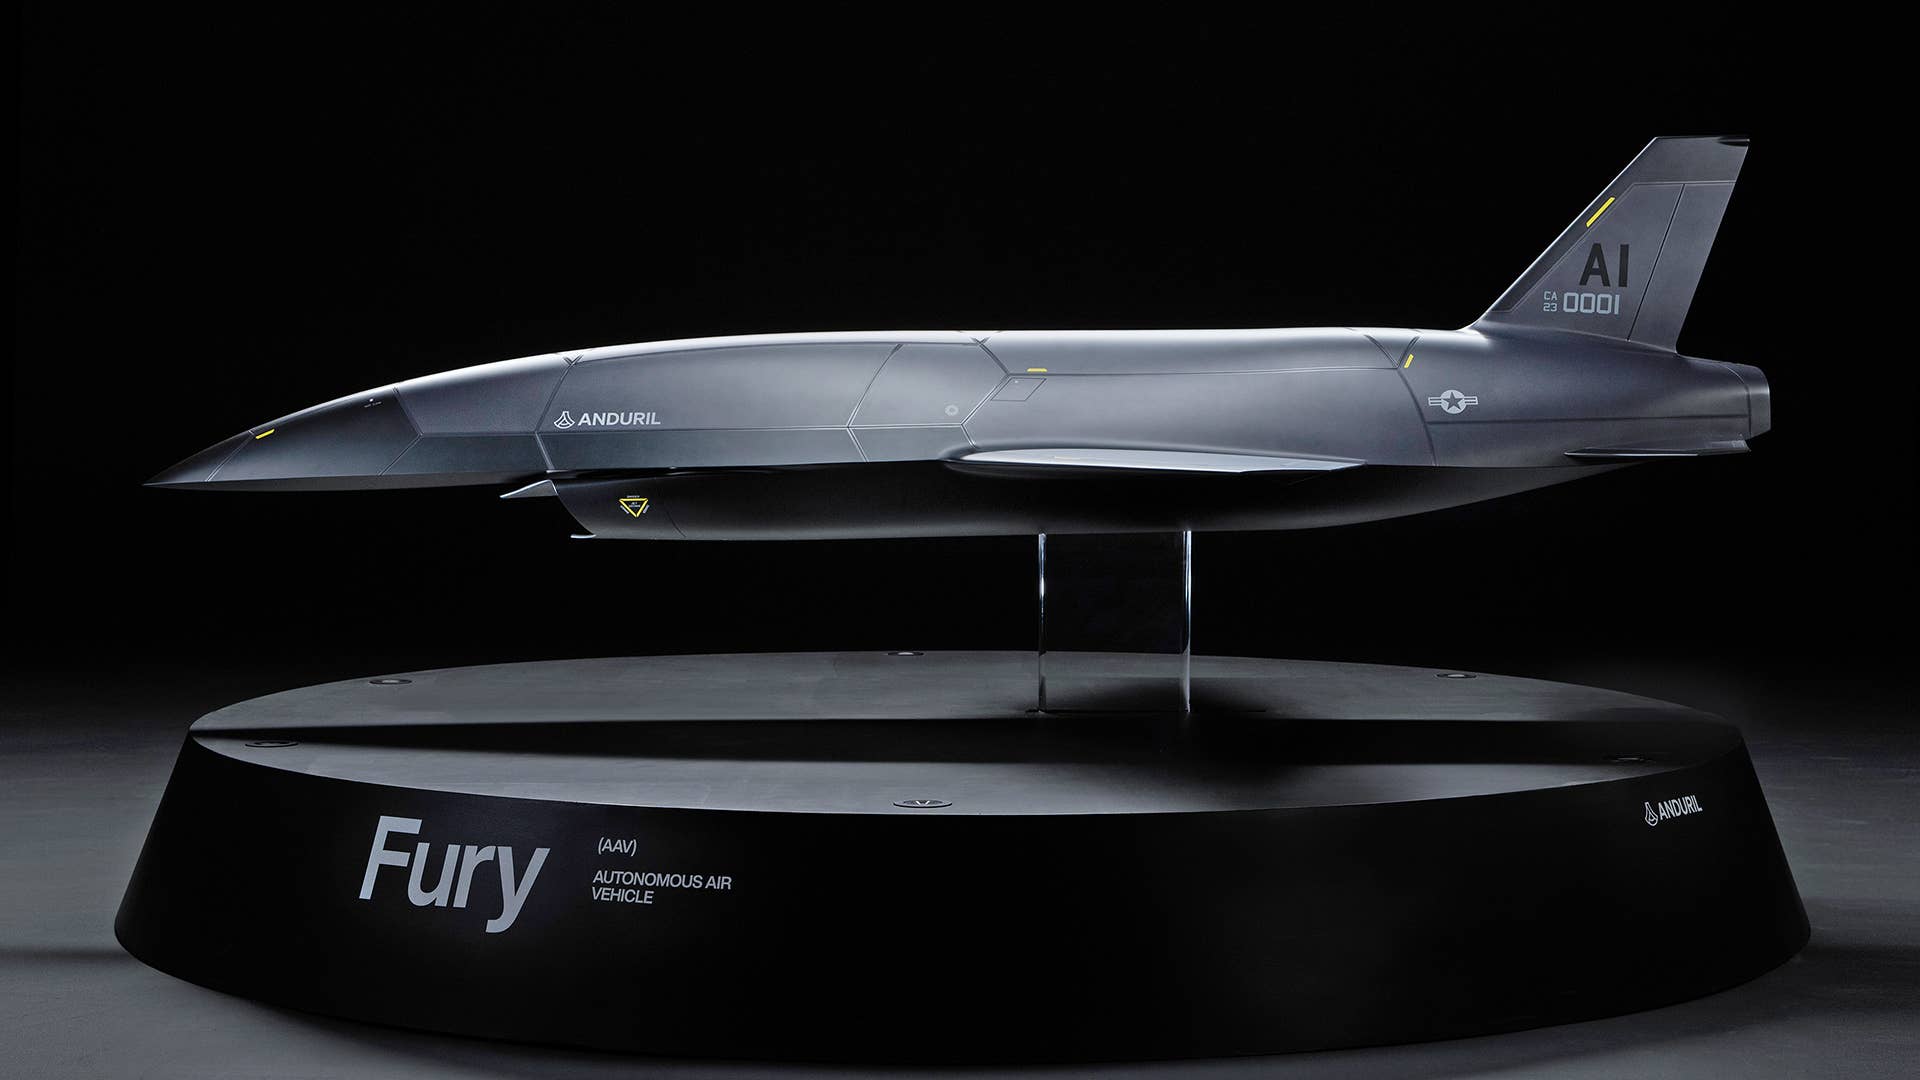 Anduril-Fury-drone.jpg